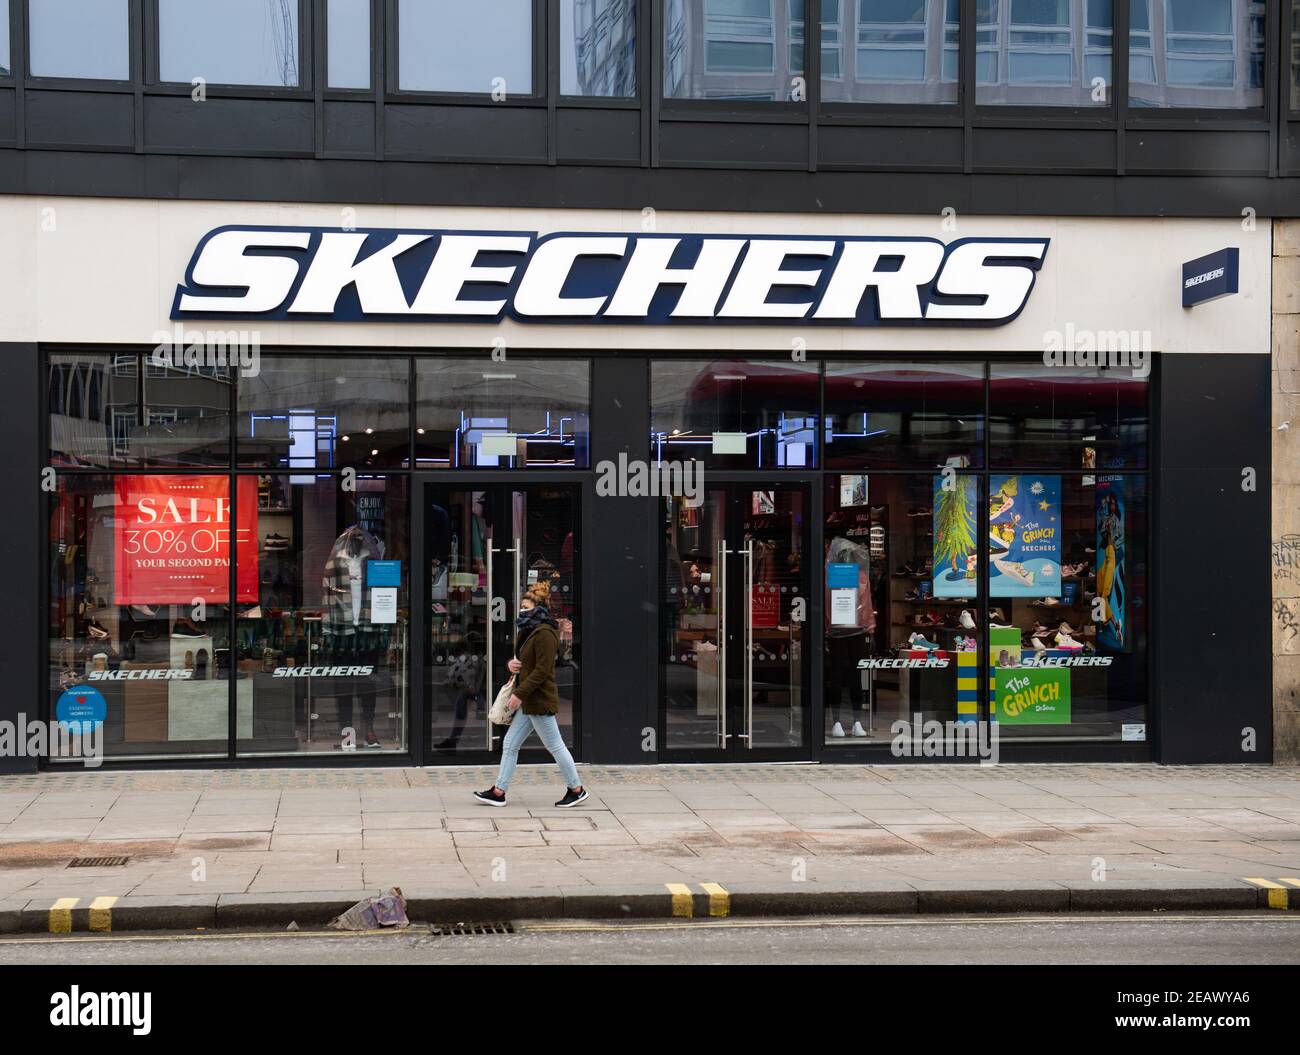 Skechers store, Oxford Street, London Stock Photo - Alamy